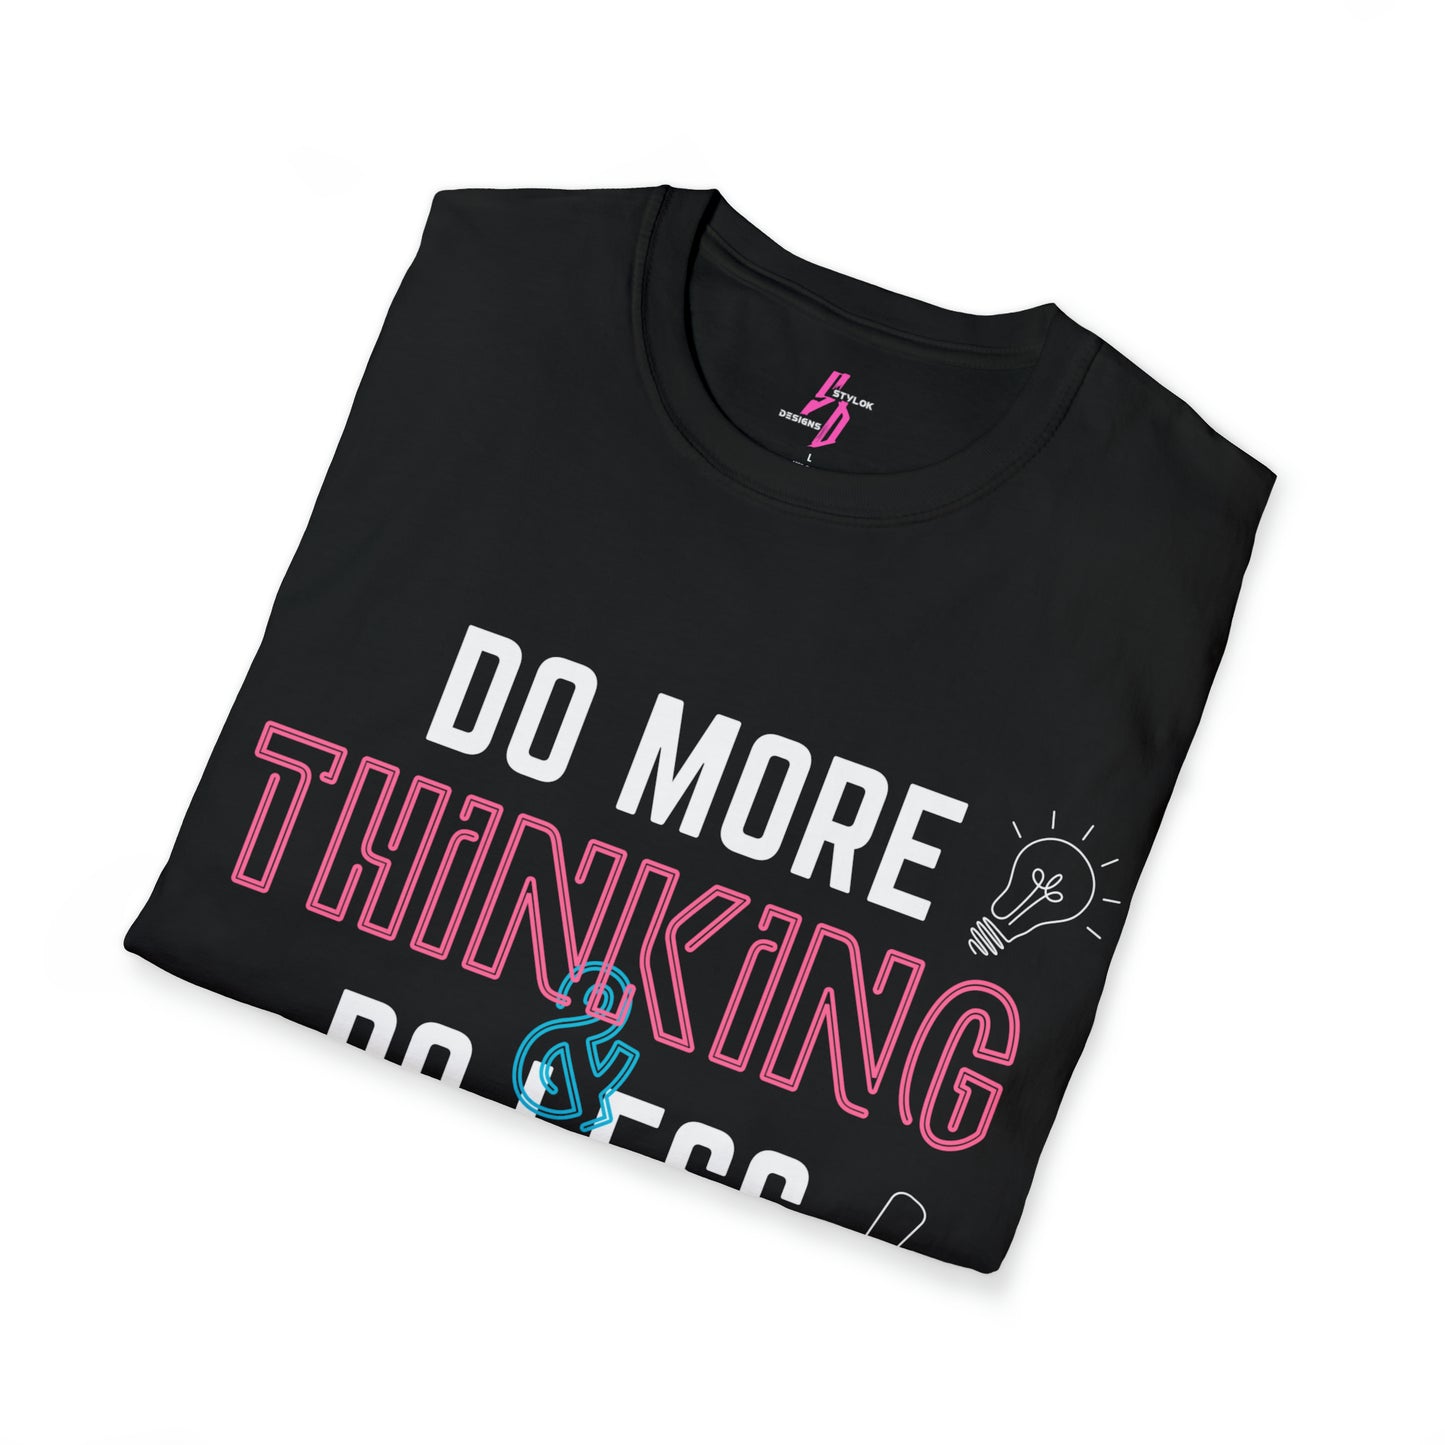 Unisex - "Do More Thinking & Do Less Reacting - " T-Shirt